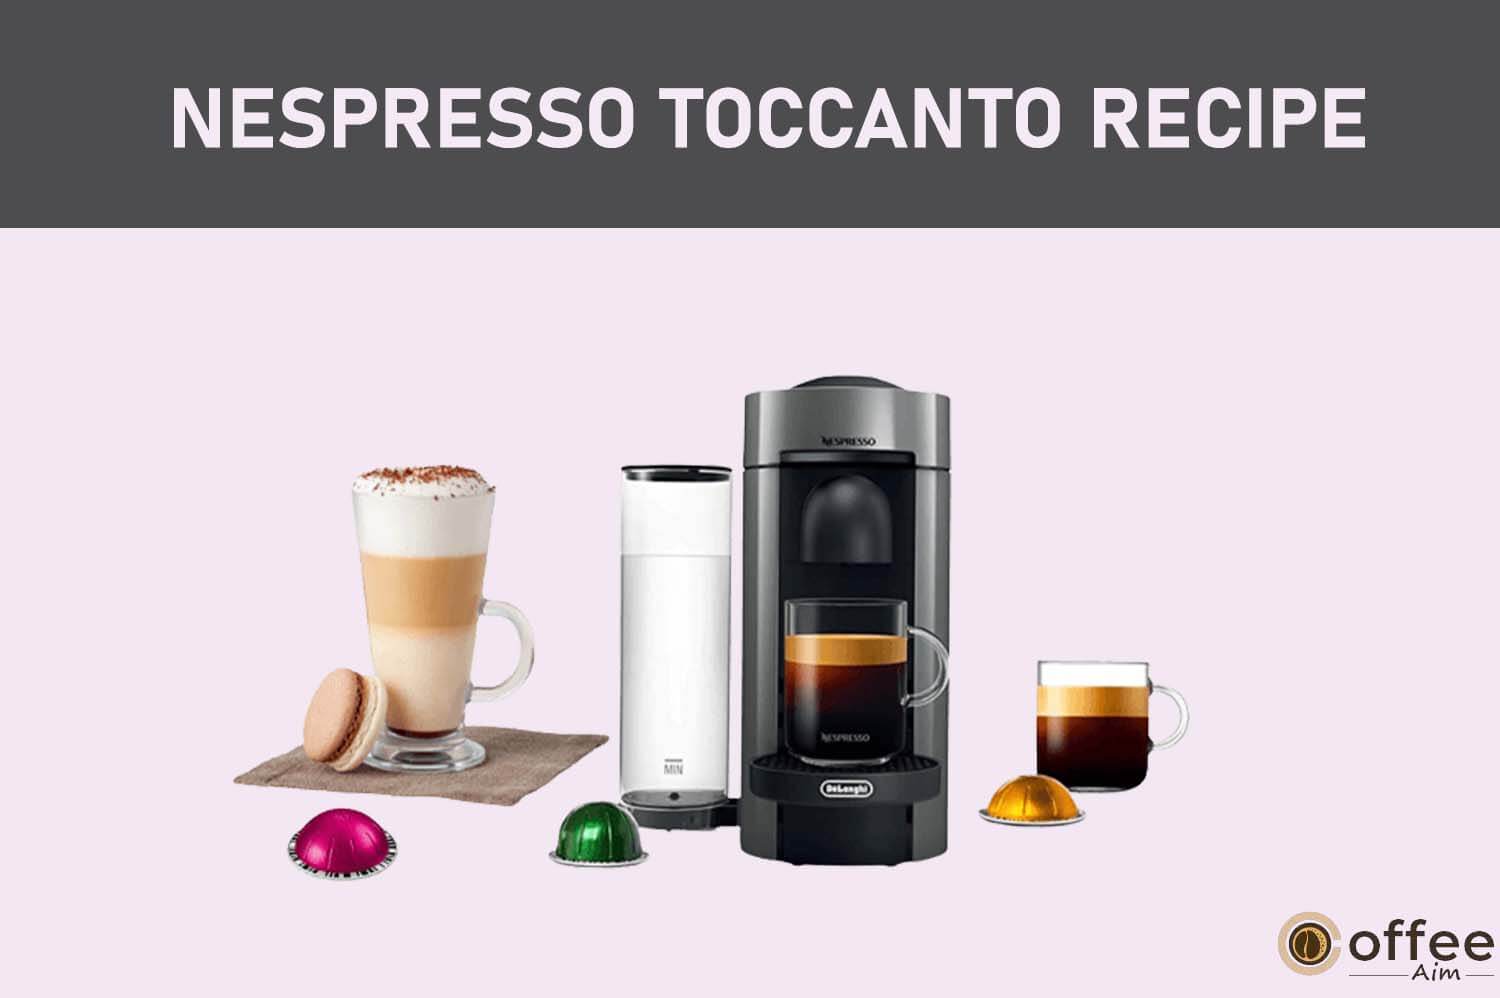 Featured image for the article "Nespresso Toccanto Recipe"